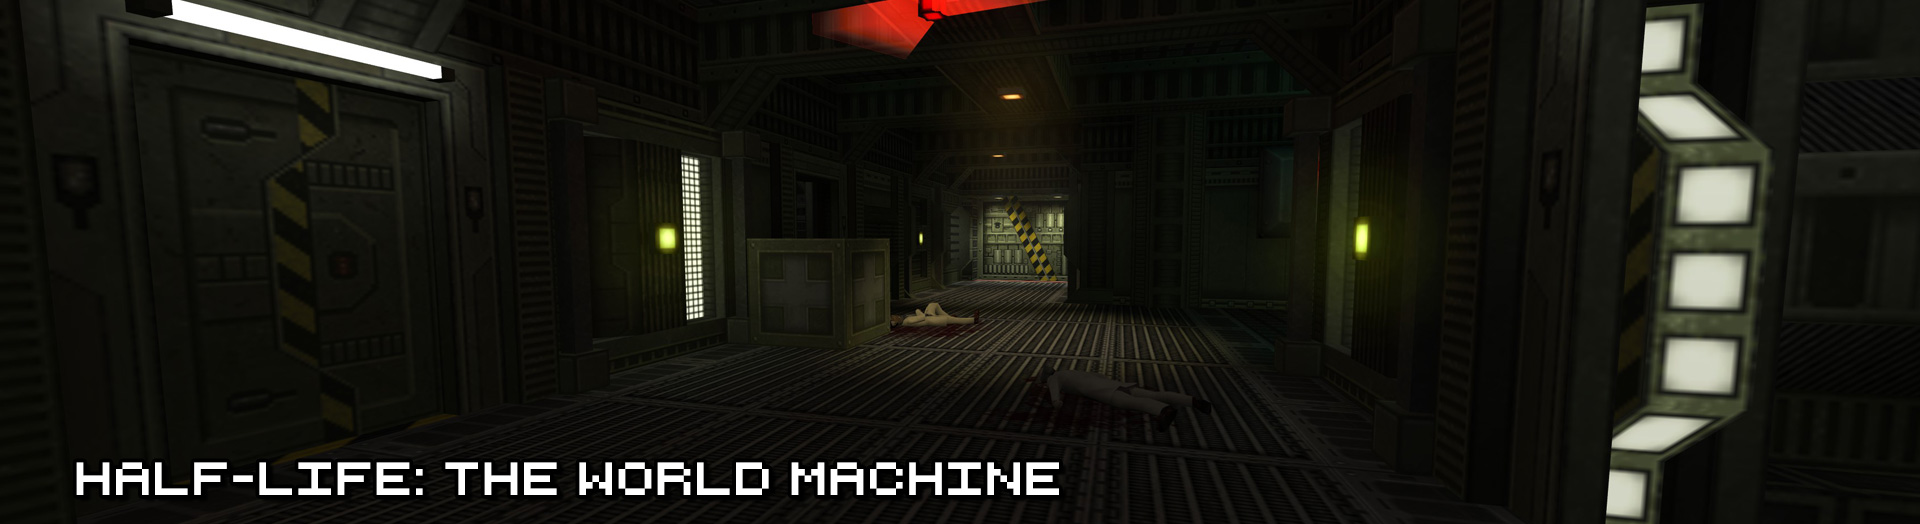 Half-Life: The World Machine